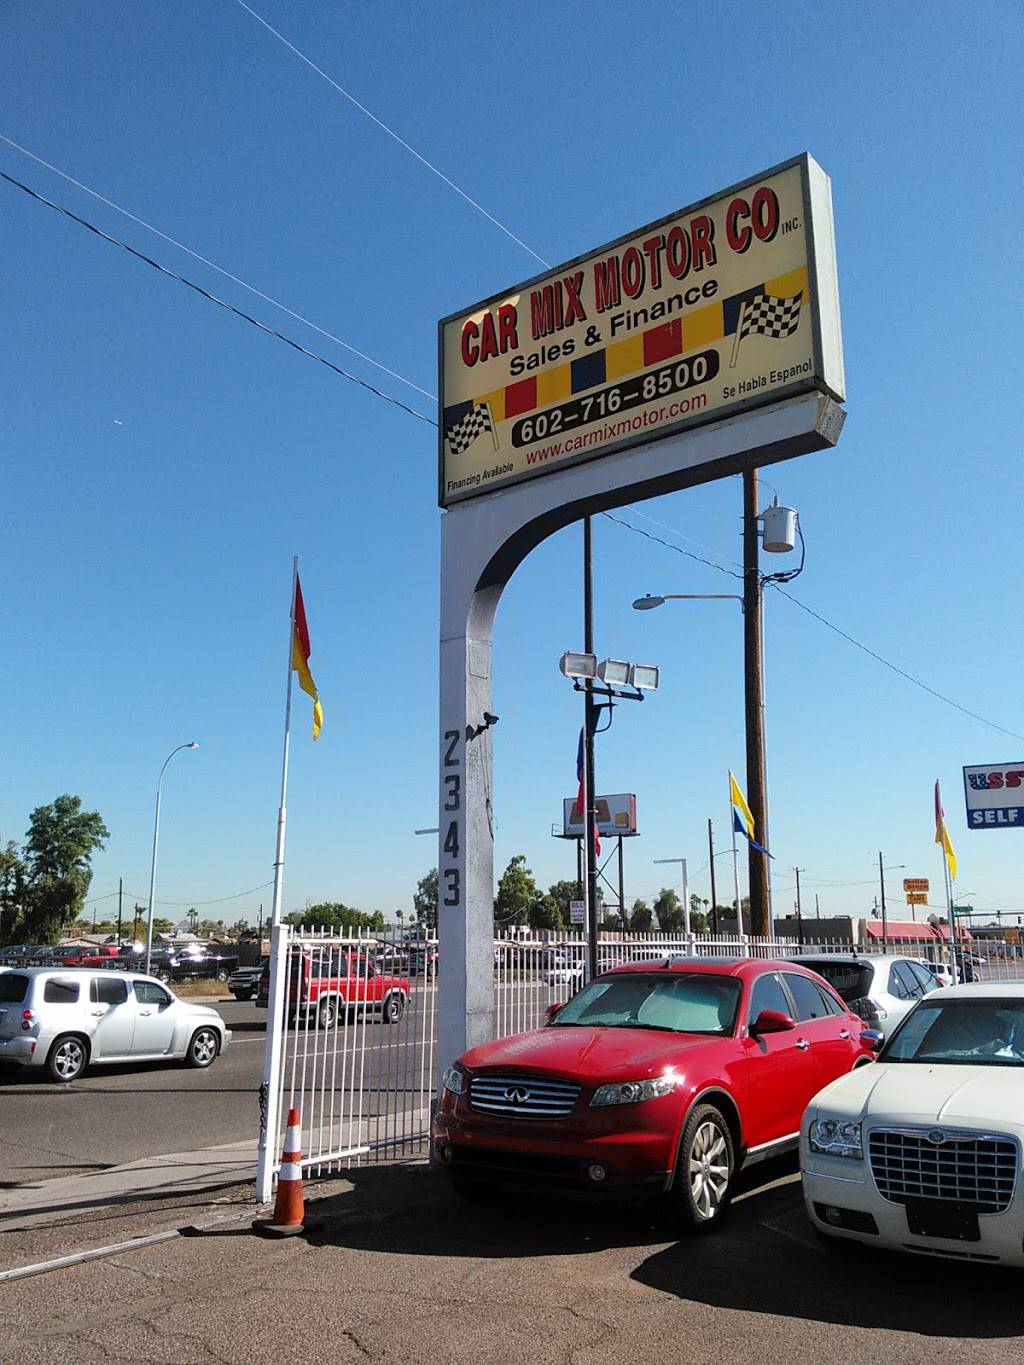 Car Mix Motor Co. | 2343 W Indian School Rd, Phoenix, AZ 85015, USA | Phone: (602) 716-8500